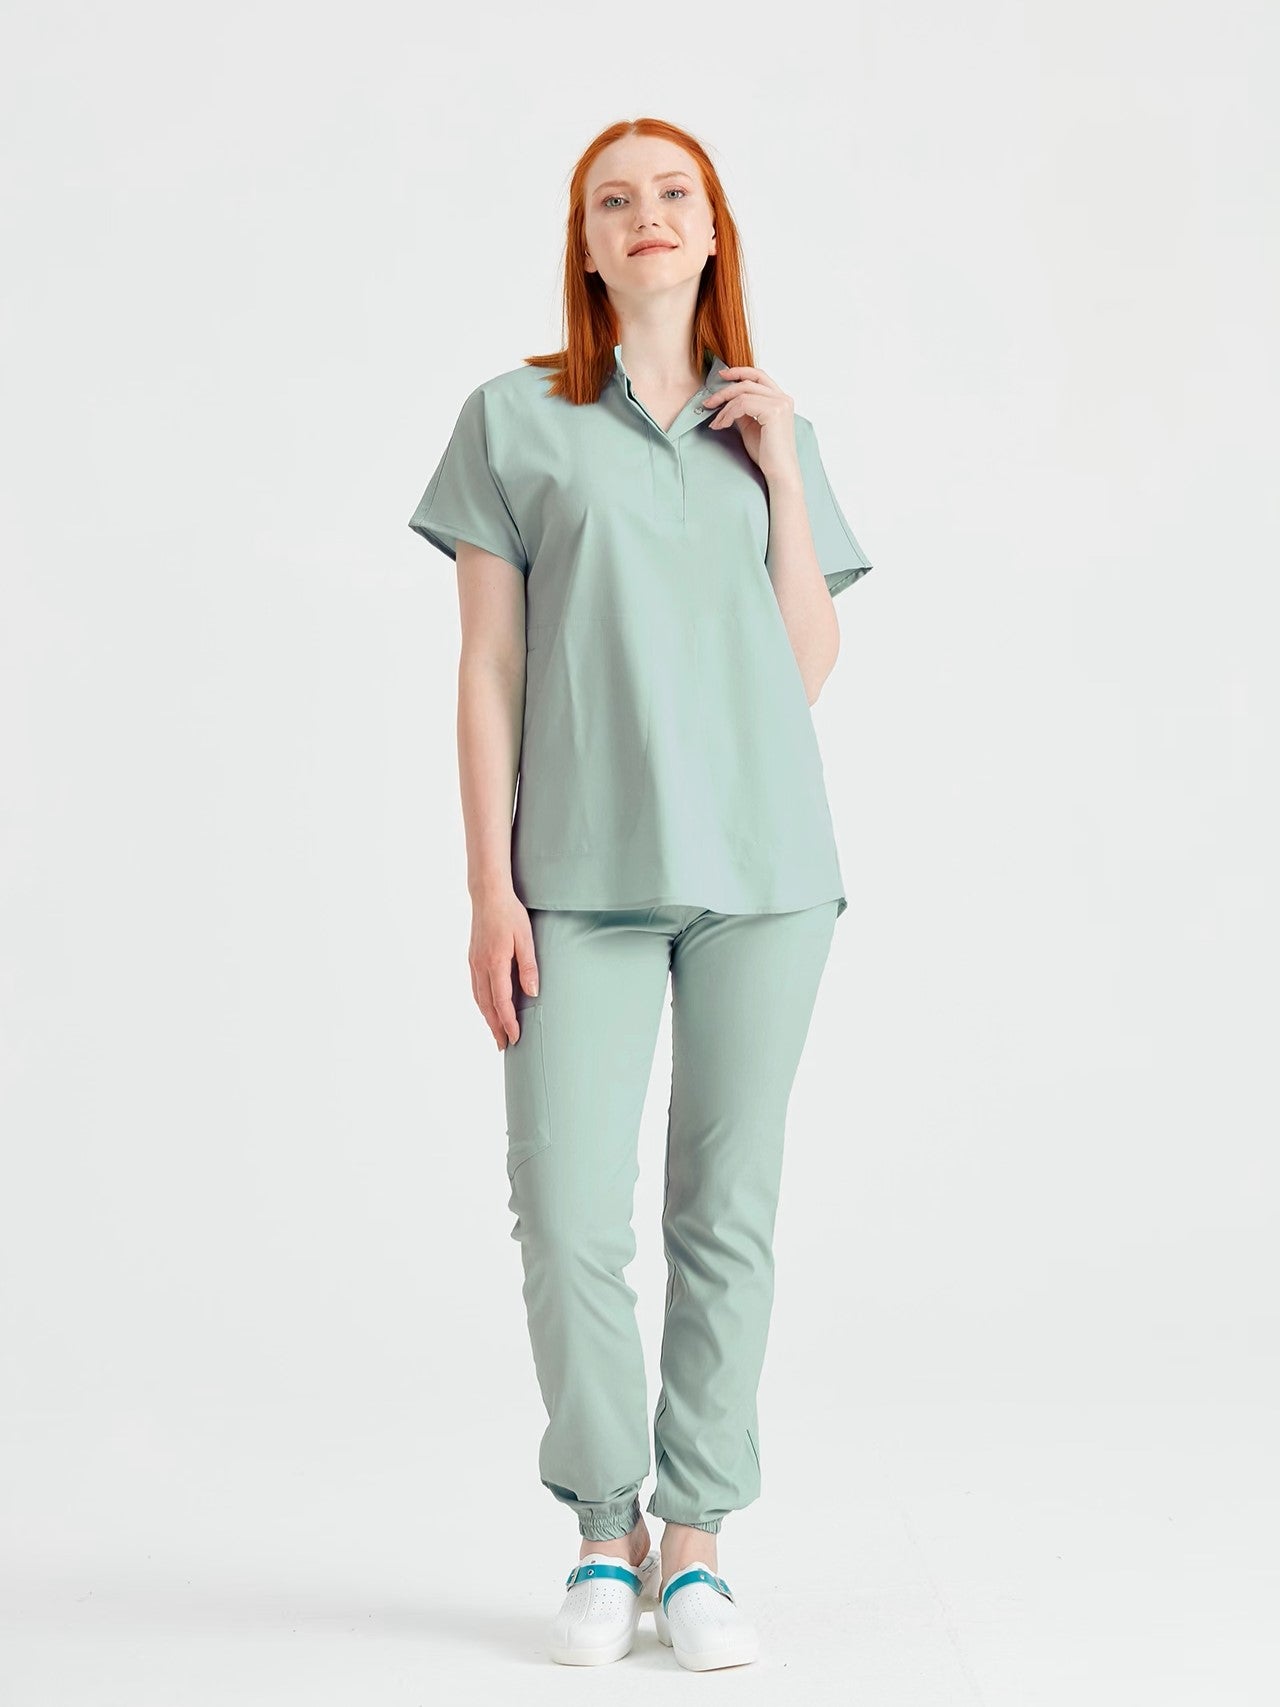 Asistenta medicala imbracata in costum medical de dama verde fistic, vedere din profil